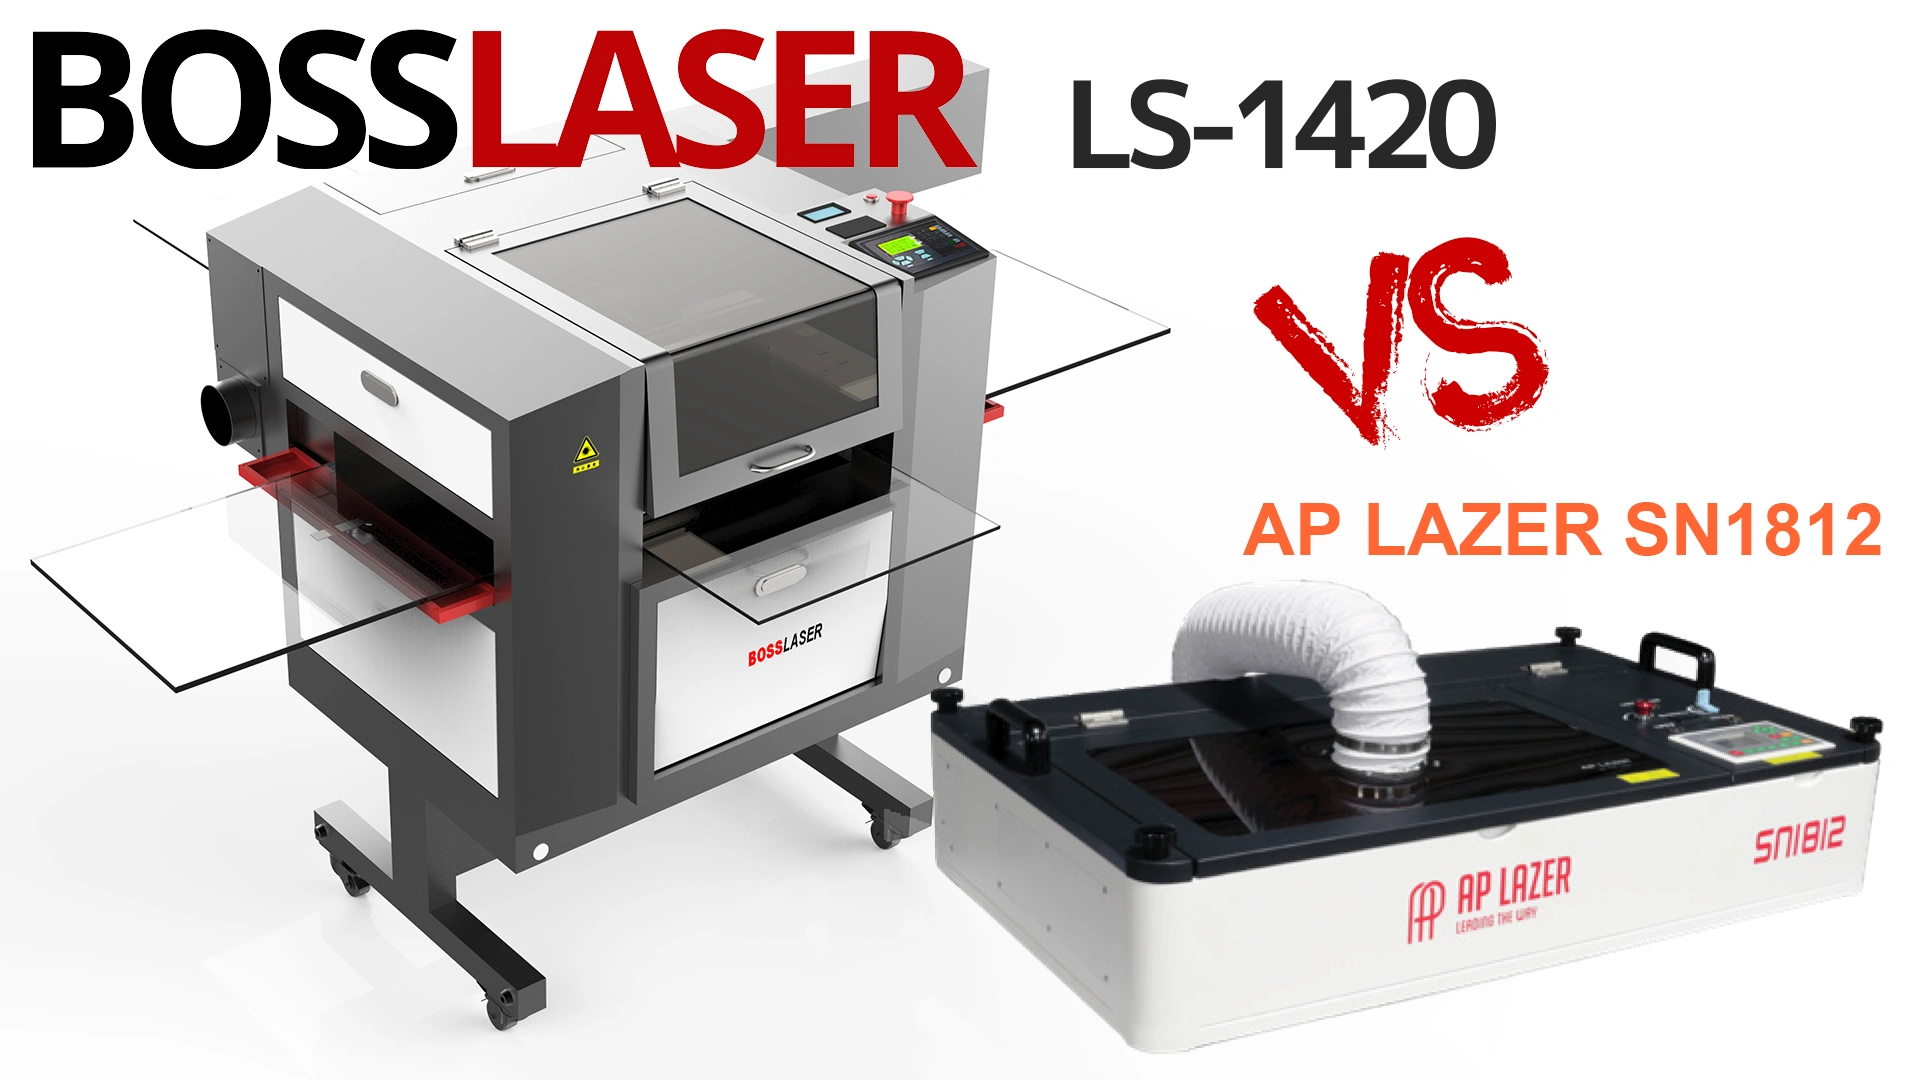 AP Lazer Review vs. Boss Laser LS-1420